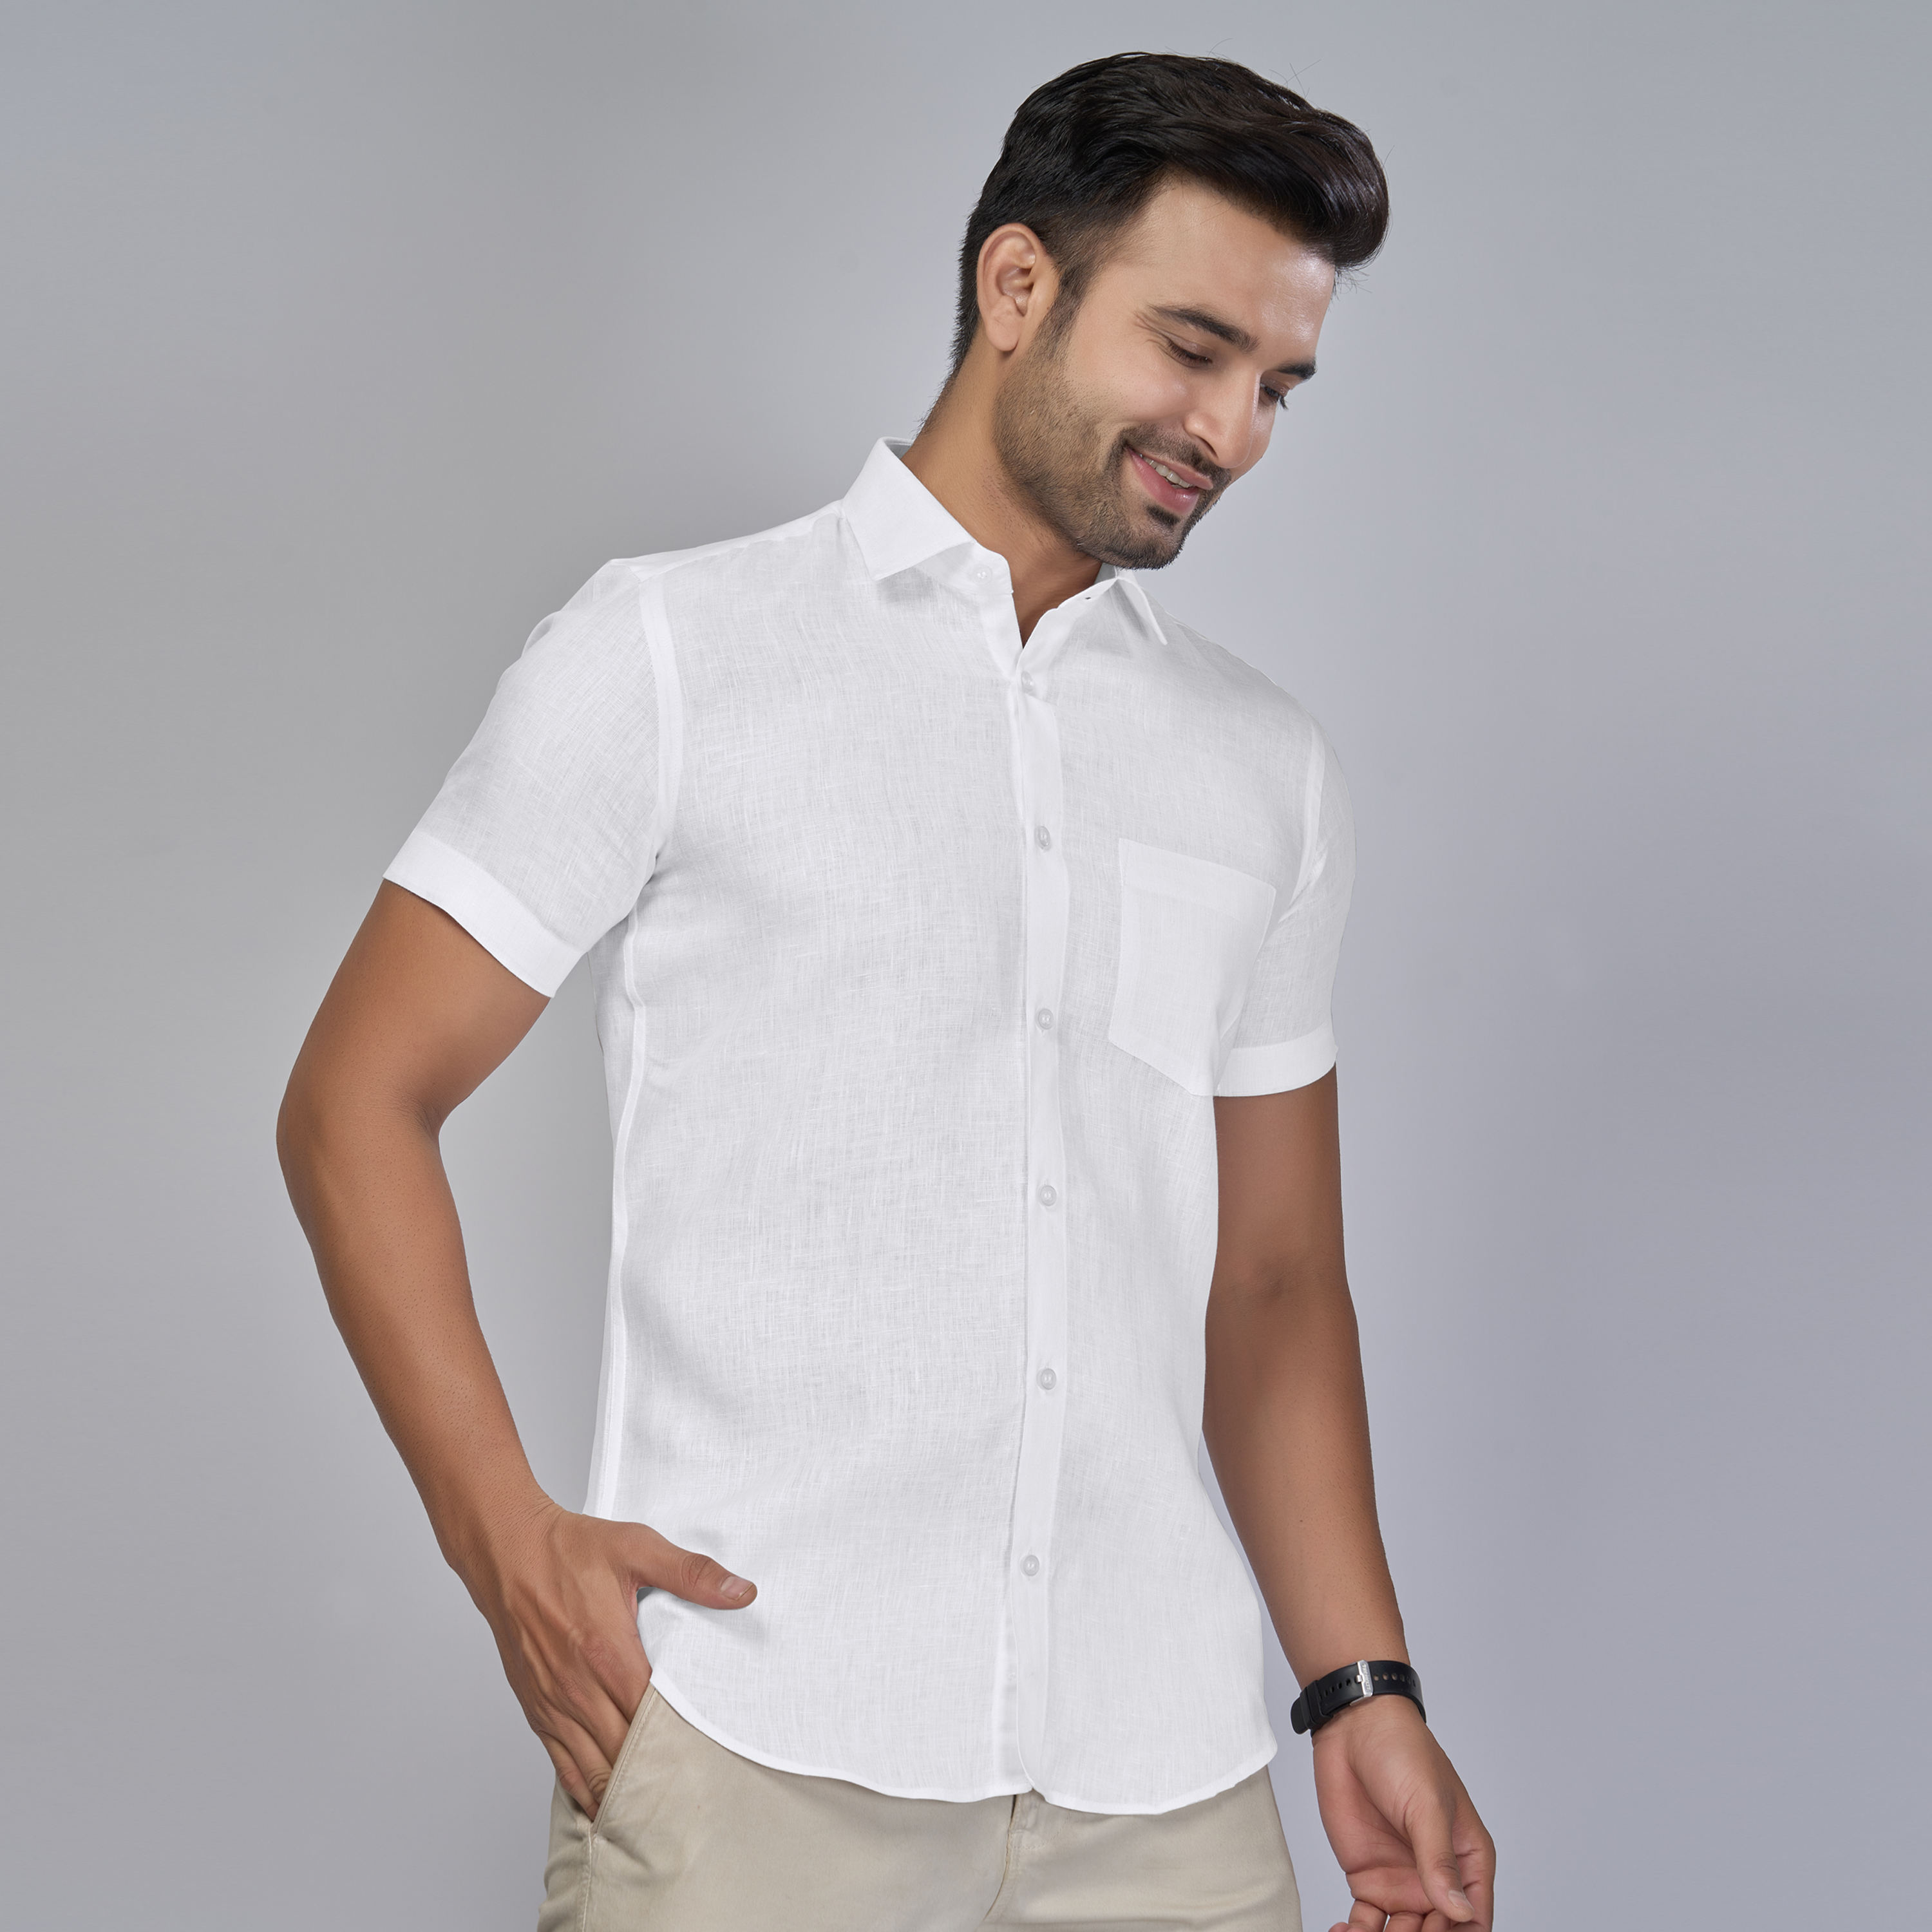  white linen shirt